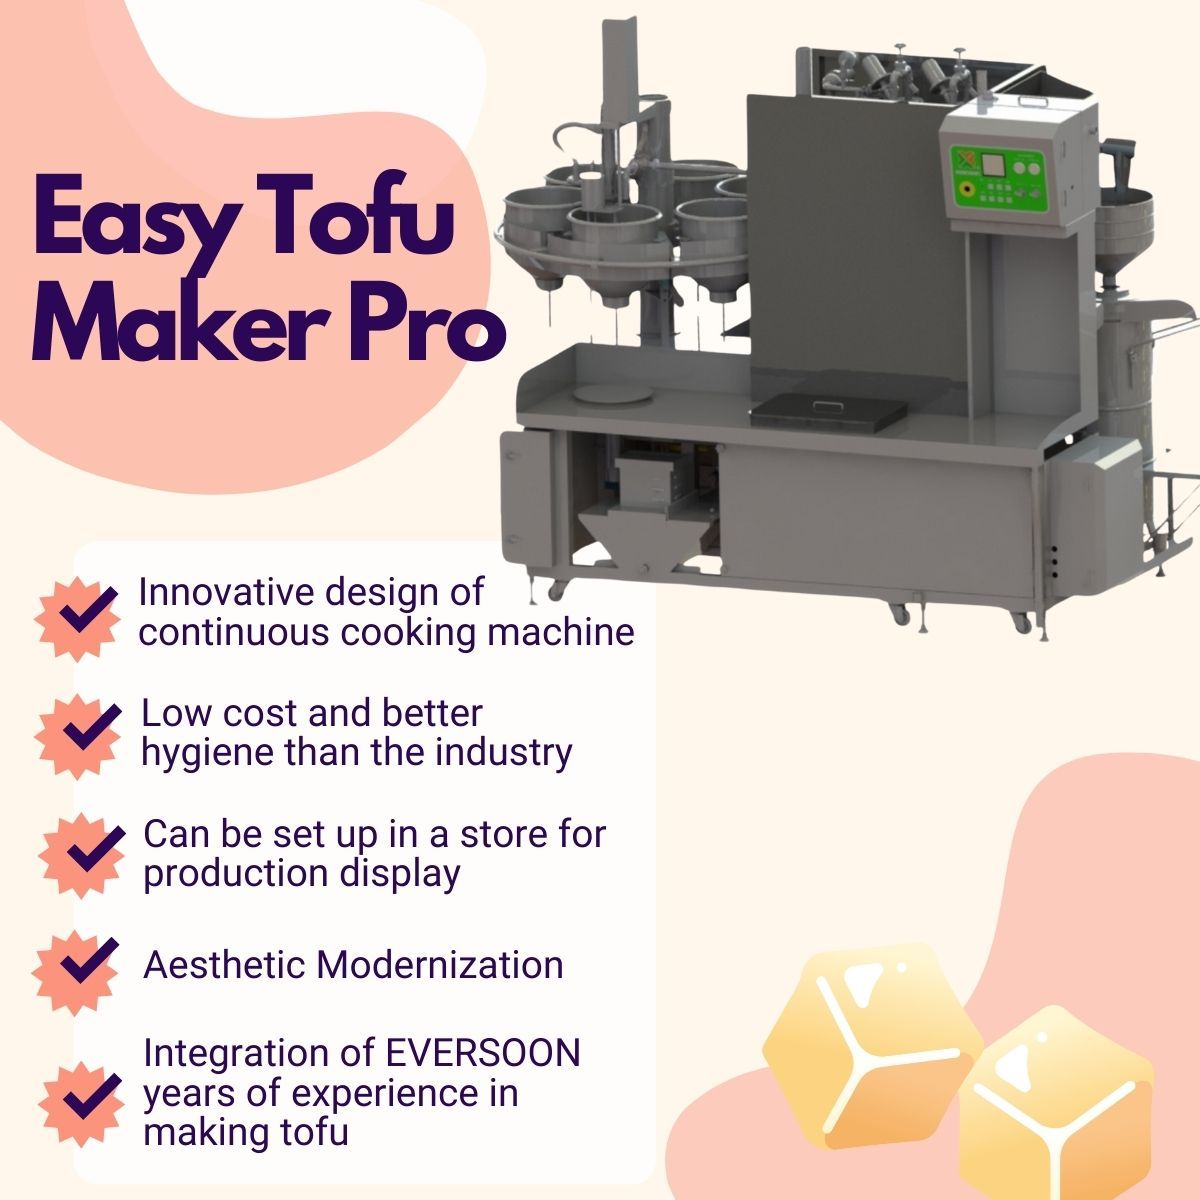 Automatisk tofu-tillverkningsmaskin, Easy Tofu Maker, Friterad tofu-maskin, Industriell tofu-tillverkning, liten tofu-maskin, Sojamatsutrustning, sojaköttsmaskin, sojamjölk och tofu-tillverkningsmaskin, tofu-utrustning, tofu-maskin, tofumaskin till salu, tofu maskintillverkare, tofu maskintillverkare, tofu maskinpris, Tofu maskineri, Tofu maskiner och utrustning, Tofu tillverkare, tofu tillverkningsmaskin, Tofu tillverkning, tofu tillverkningsutrustning, tofutillverkningsmaskin, pris för tofu-tillverkningsmaskin, tofu-tillverkare, tofu-tillverkning, utrustning för tofu-tillverkning, tofu-tillverkningsanläggning, utrustning för tofu-produktion, produktionslinje för tofu, pris för produktionslinje för tofu, tofu-maskin, automatisk tofu-maskin, vegansk köttmaskin, vegansk köttproduktionslinje, grönsaks-tofumaskiner och utrustning, kommersiell tofu-maskin, automatisk sojamjölkmaskin, automatisk sojamjölksmaskin, enkel tofu-tillverkare, produktion av sojamjölk, sojadrinkmaskin, sojamjölk och tofu tillverkning kommersiell sojamjölksmaskin, sojamjölk och tofu tillverkningsmaskin, Sojamjölkskokmaskin, sojamjölksmaskin, Sojamjölksmaskin tillverkad i Taiwan, Sojamjölksmaskiner, Sojamjölksmaskiner och utrustning, sojamjölktillverkare, Sojamjölktillverkningsmaskin, sojamjölktillverkare, Sojamjölkproduktion, utrustning för sojamjölkproduktion, Sojamjölksproduktionslinje, sojamjölksmaskinpris, sojabönsbearbetningsmaskin, sojamjölksmaskin, sojamjölk och tofu-tillverkningsmaskin, kommersiell sojamjölksmaskin, kommersiell sojabönmjölksmaskin, sojamjölkmaskin kommersiell, Sojabönsmjölkkokare för affärsbruk, Sojabönsmjölkskvarn för affärsbruk, Sojabönsmjölksmaskin för affärsbruk, sojamjölksmaskiner för affärsbruk, butik sojamjölksproduktionsutrustning